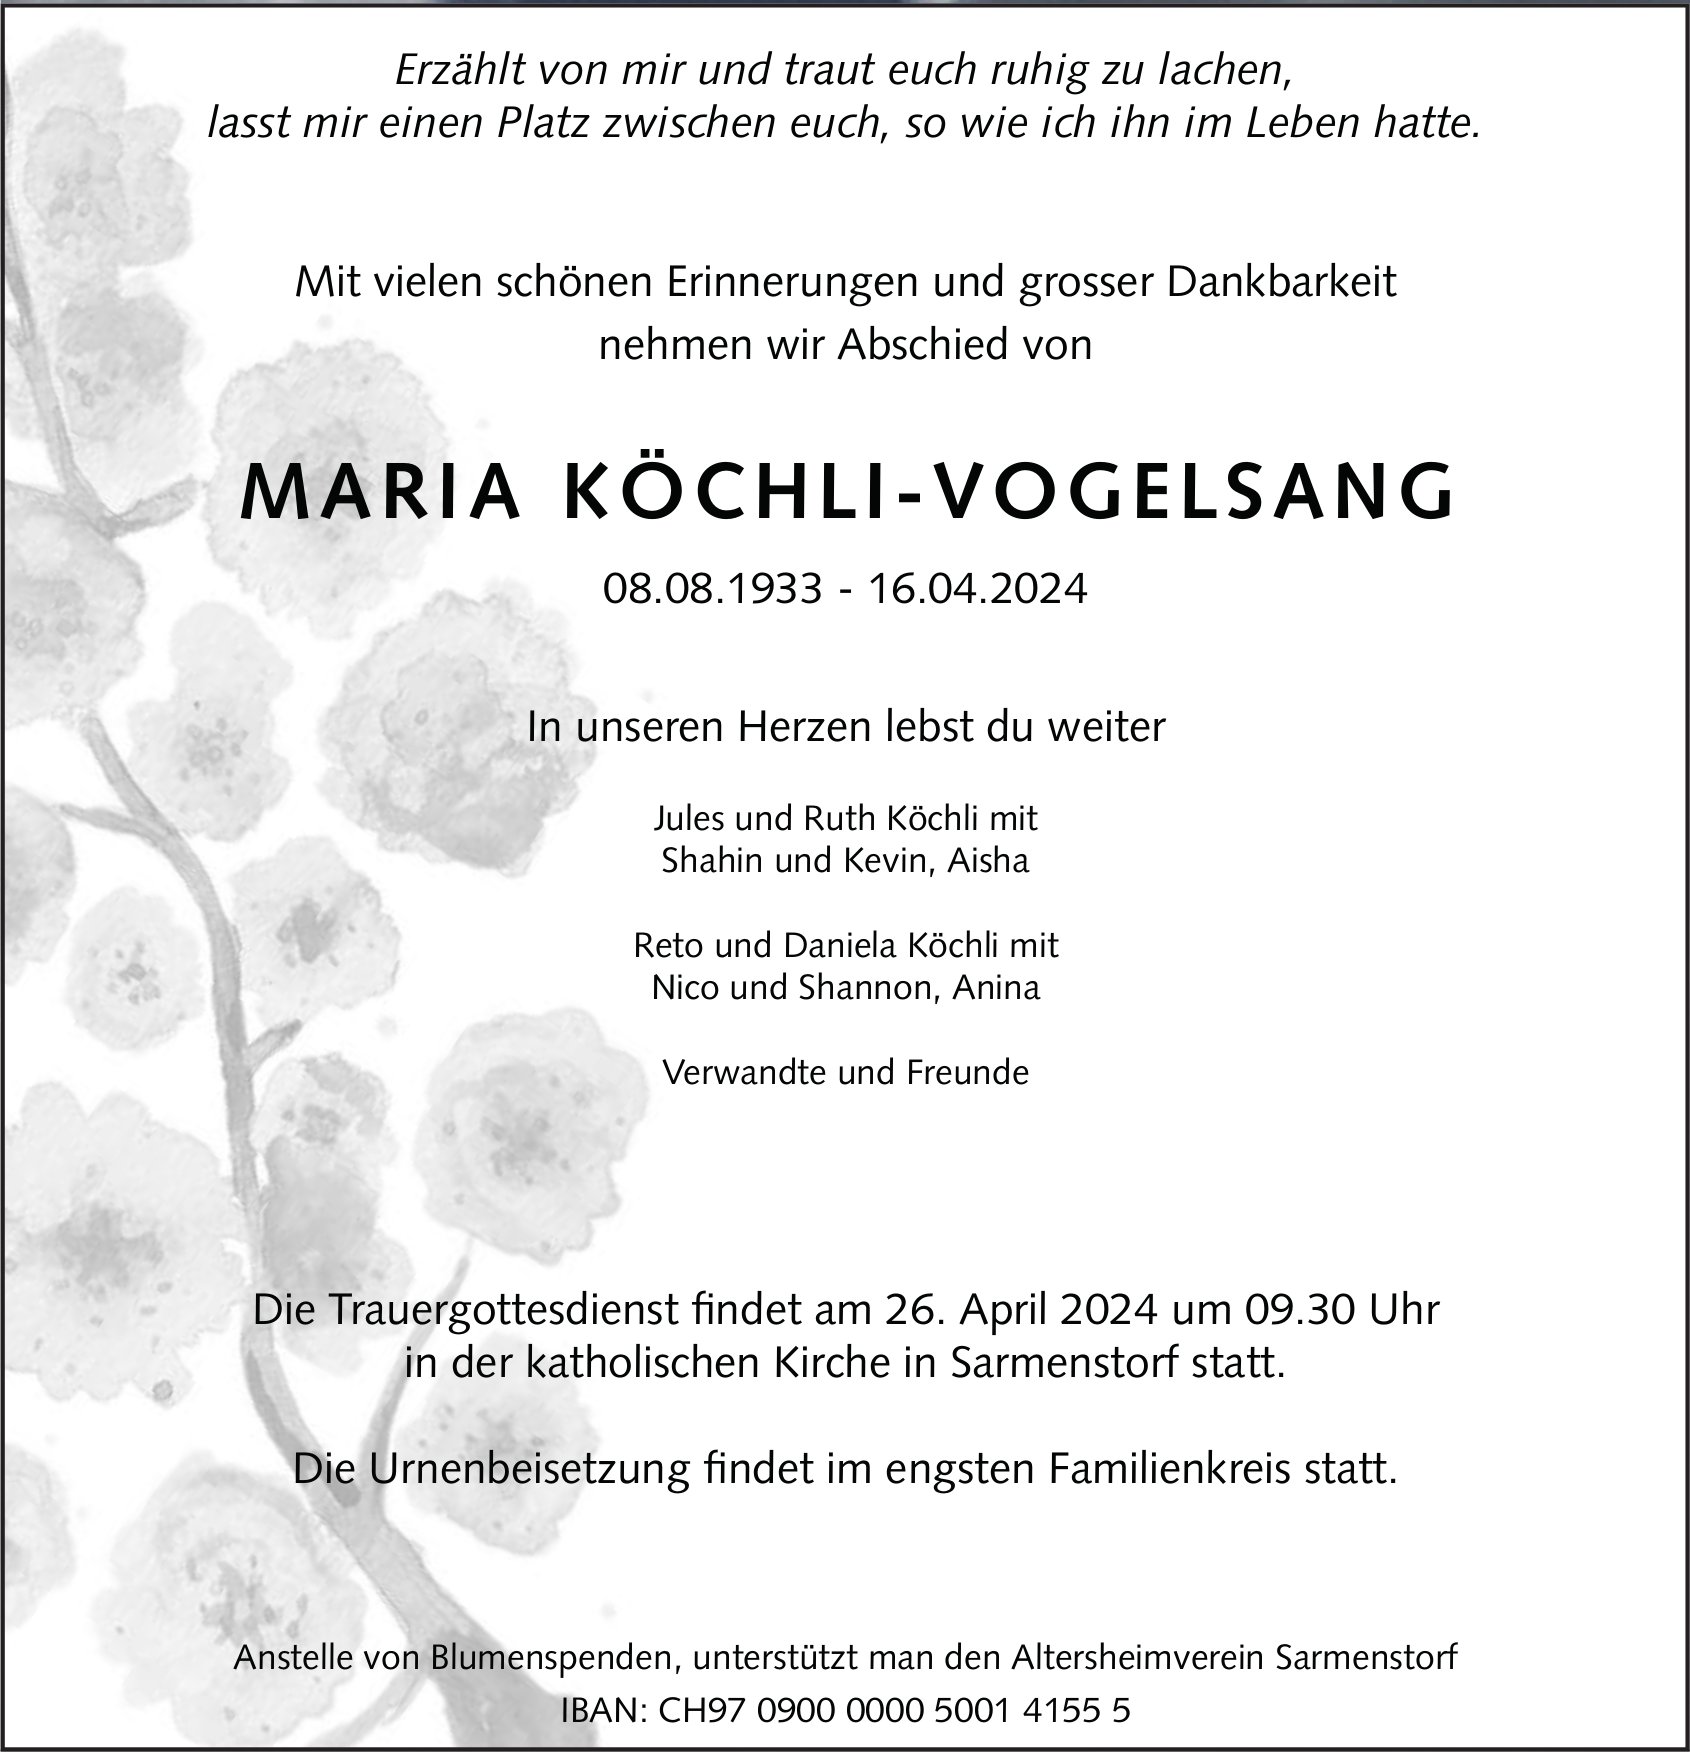 Maria Köchli-Vogelsang, April 2024 / TA